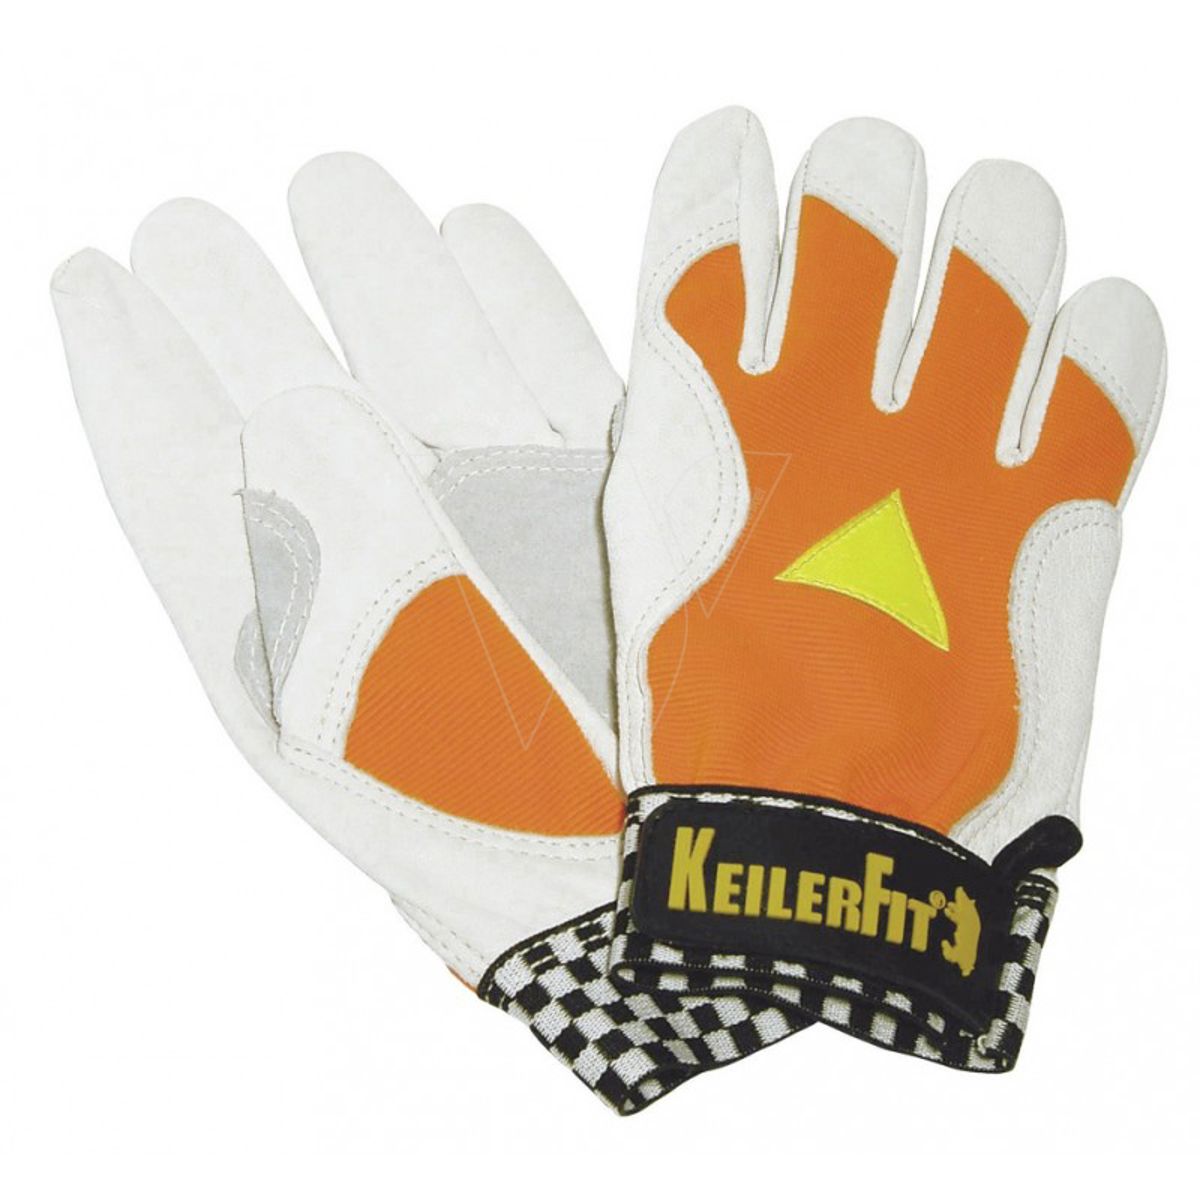 Keilerfit work glove nappa leather 12